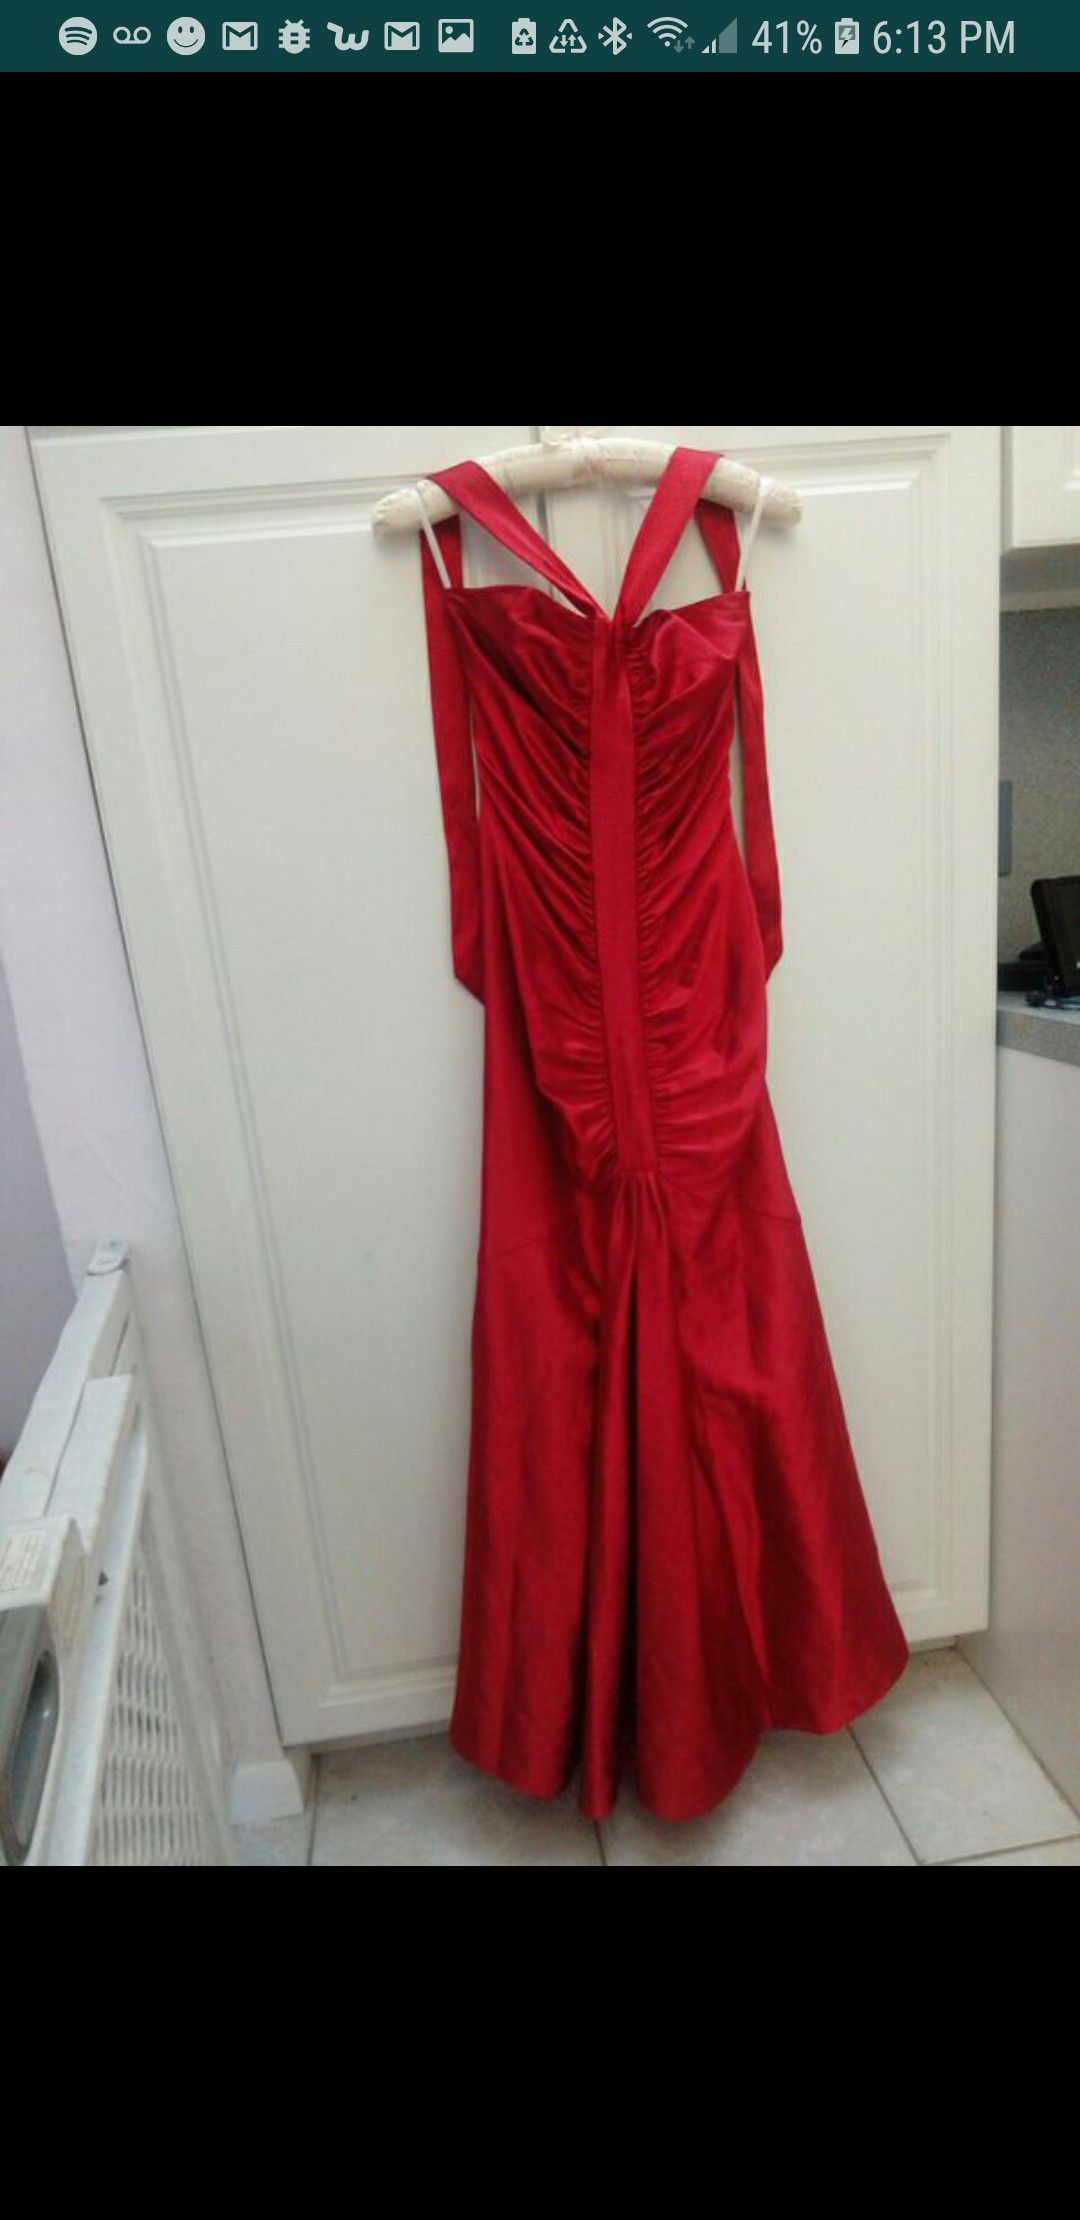 Mermaid style red satin dress